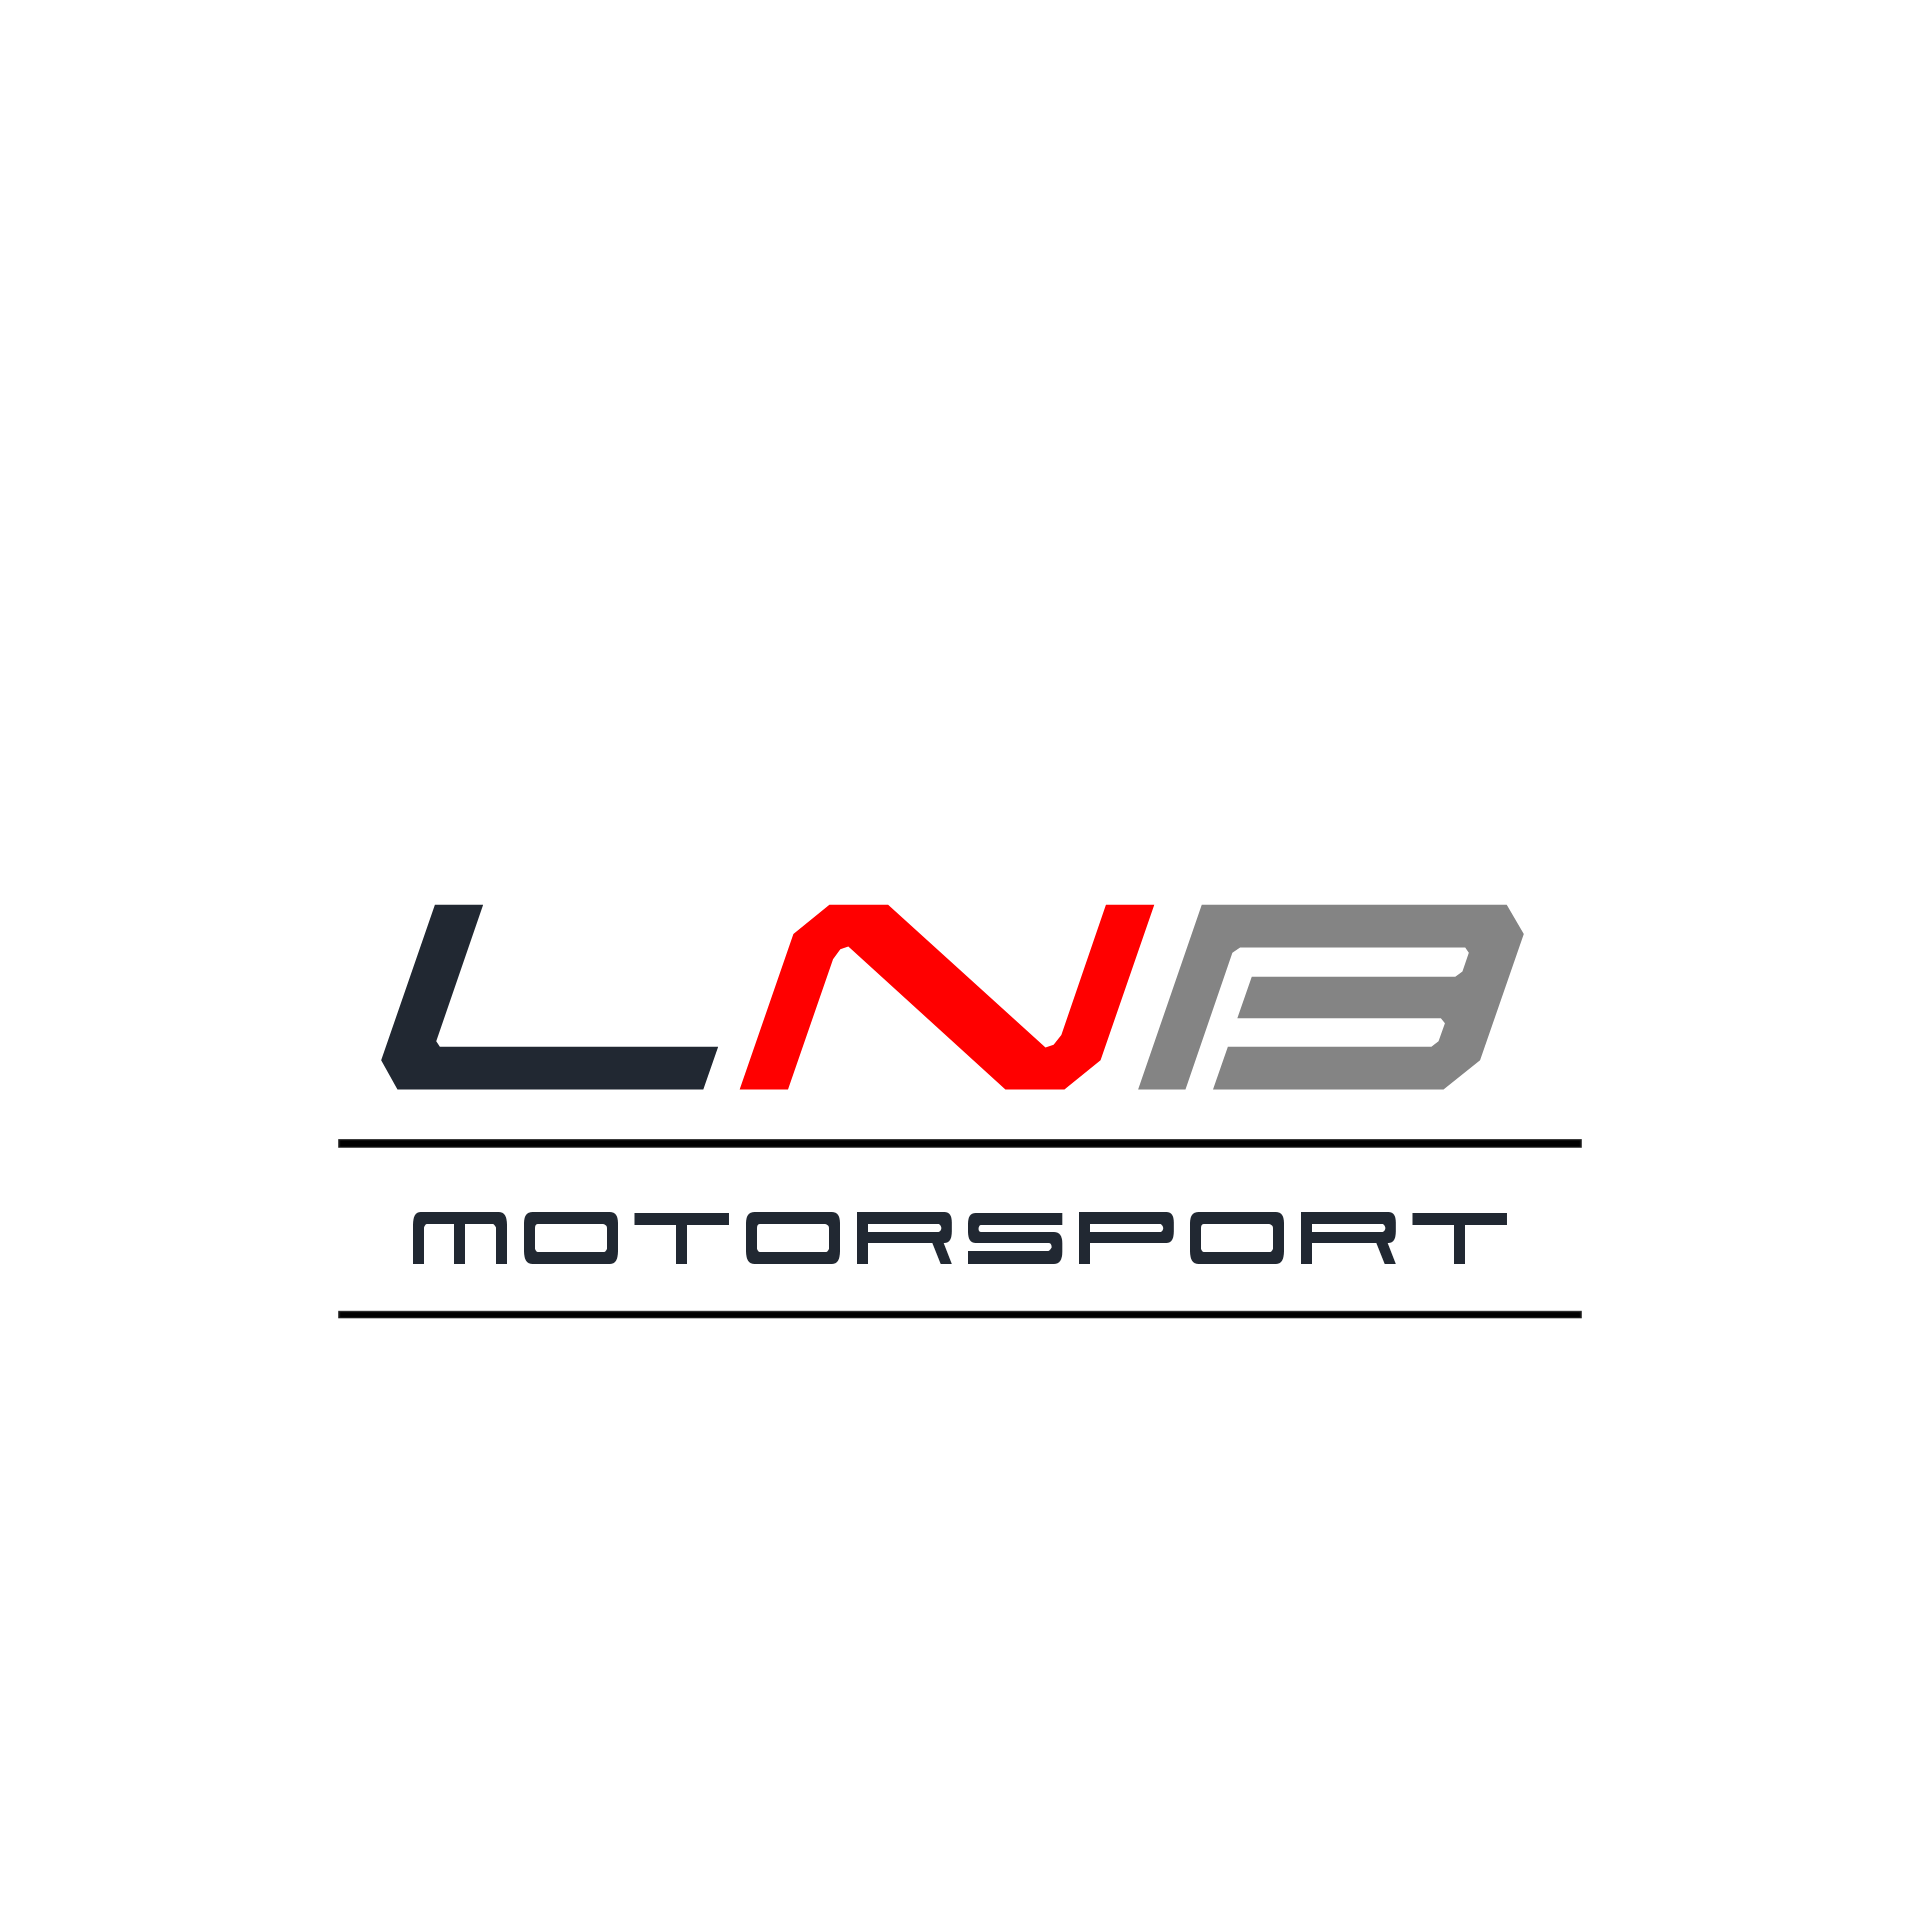 LNB Motorsport